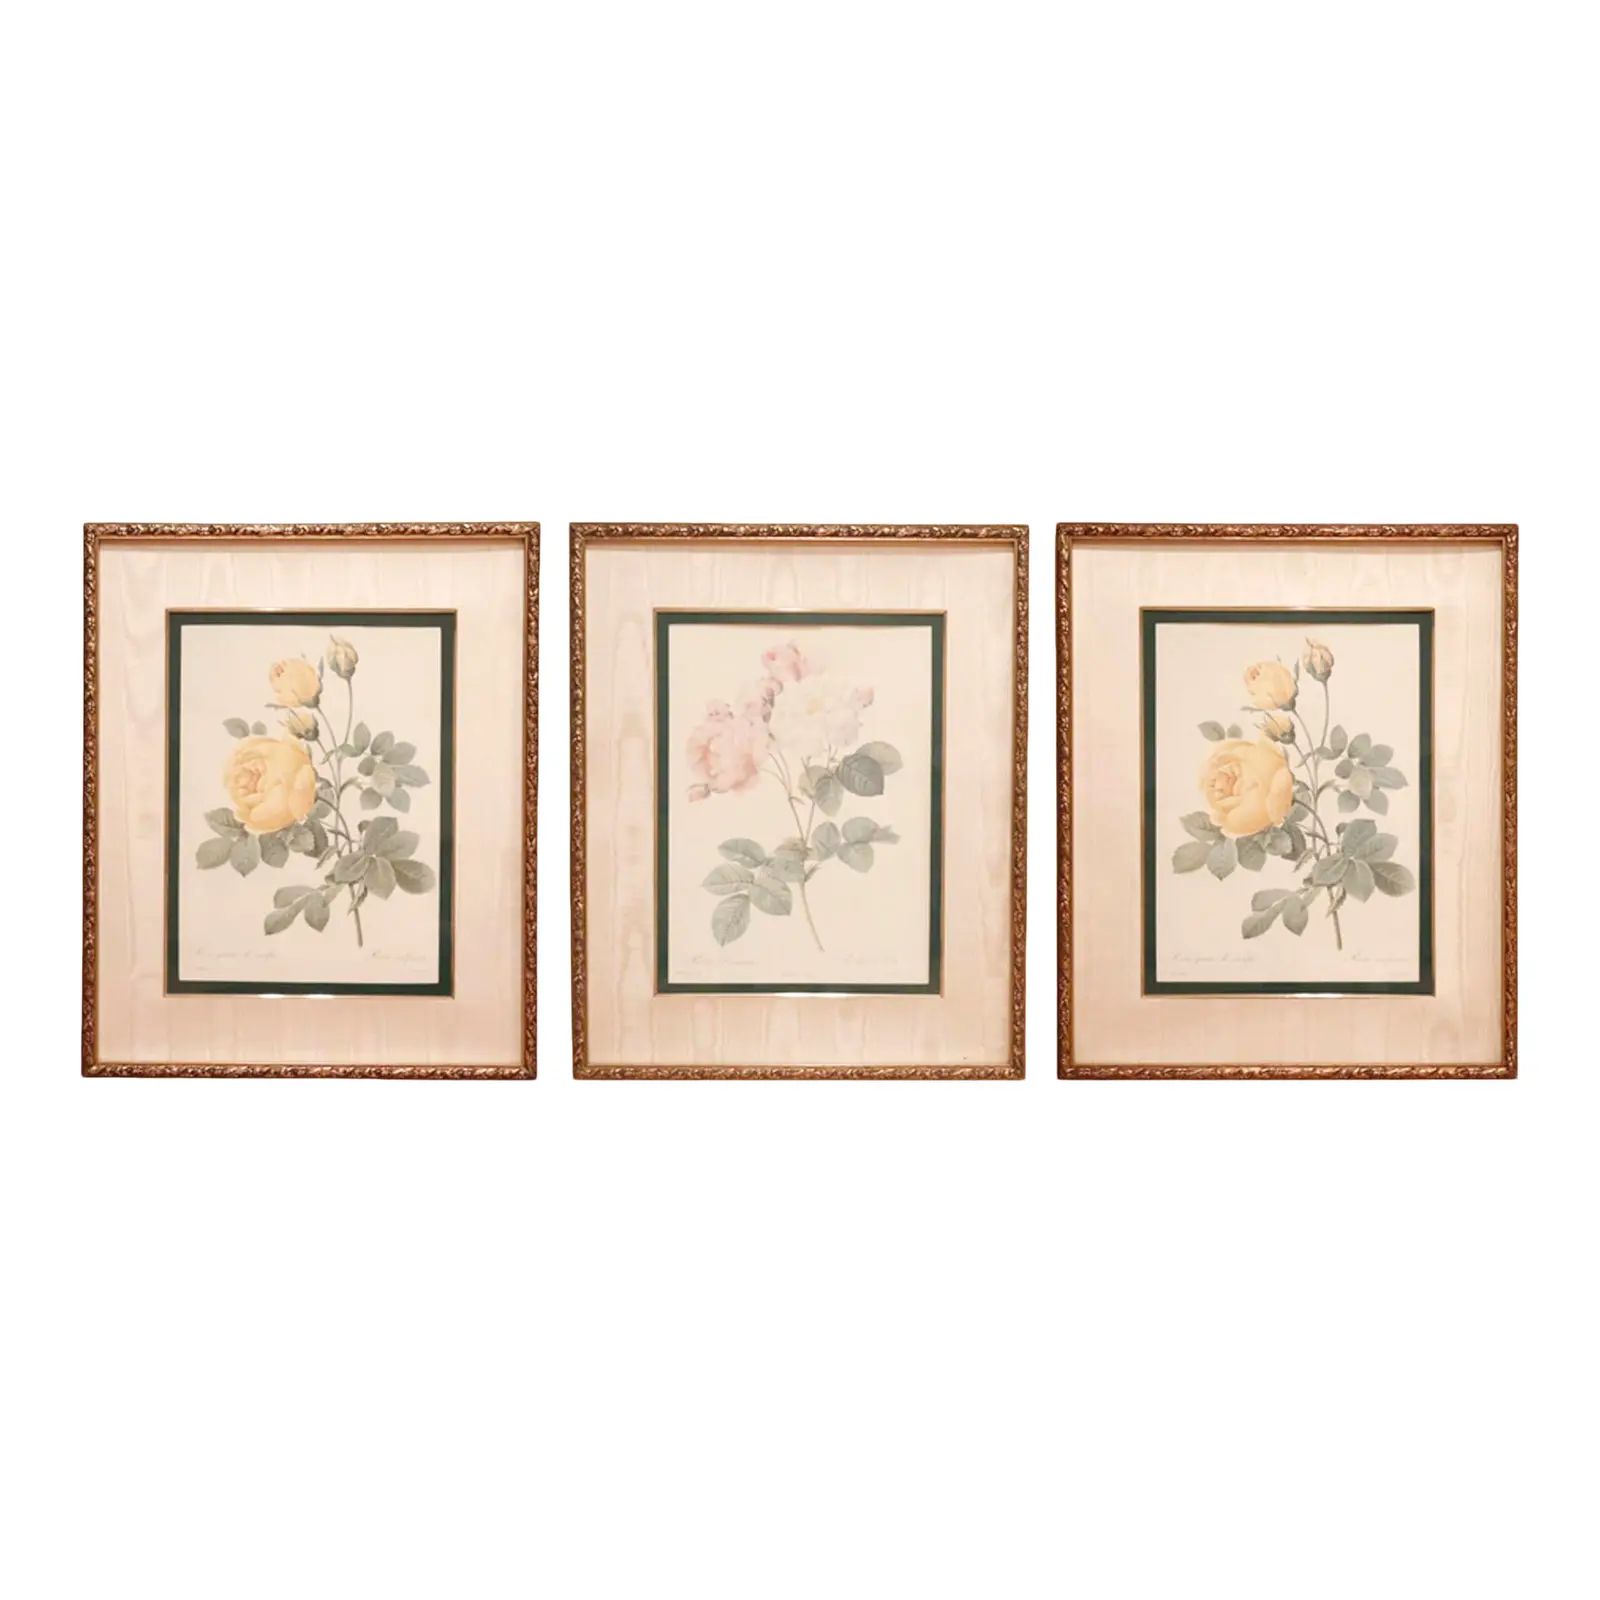 Framed Pierre-Joseph Redouté Prints - Set of 3 | Chairish